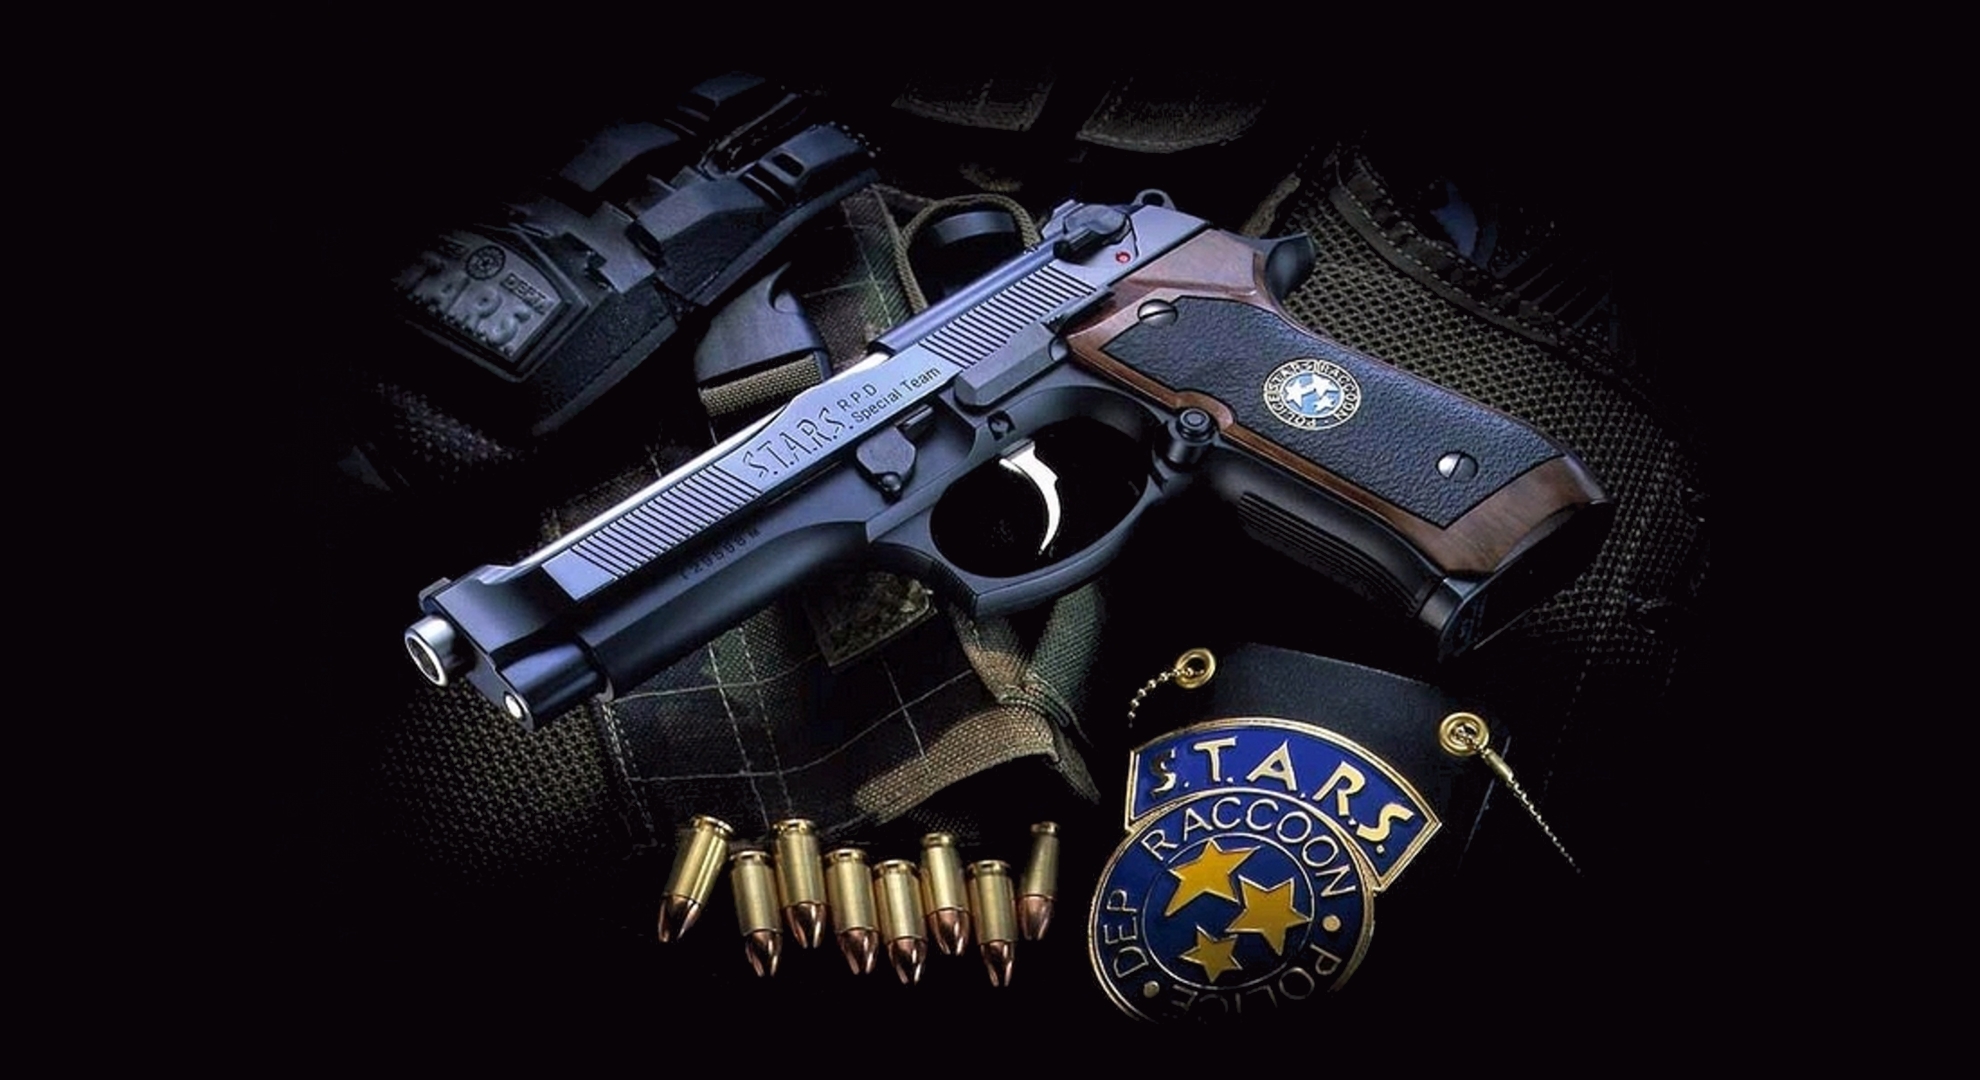 пистолеты, звезды, Resident Evil, оружие, Beretta, боеприпасы, Самурай Край - обои на рабочий стол